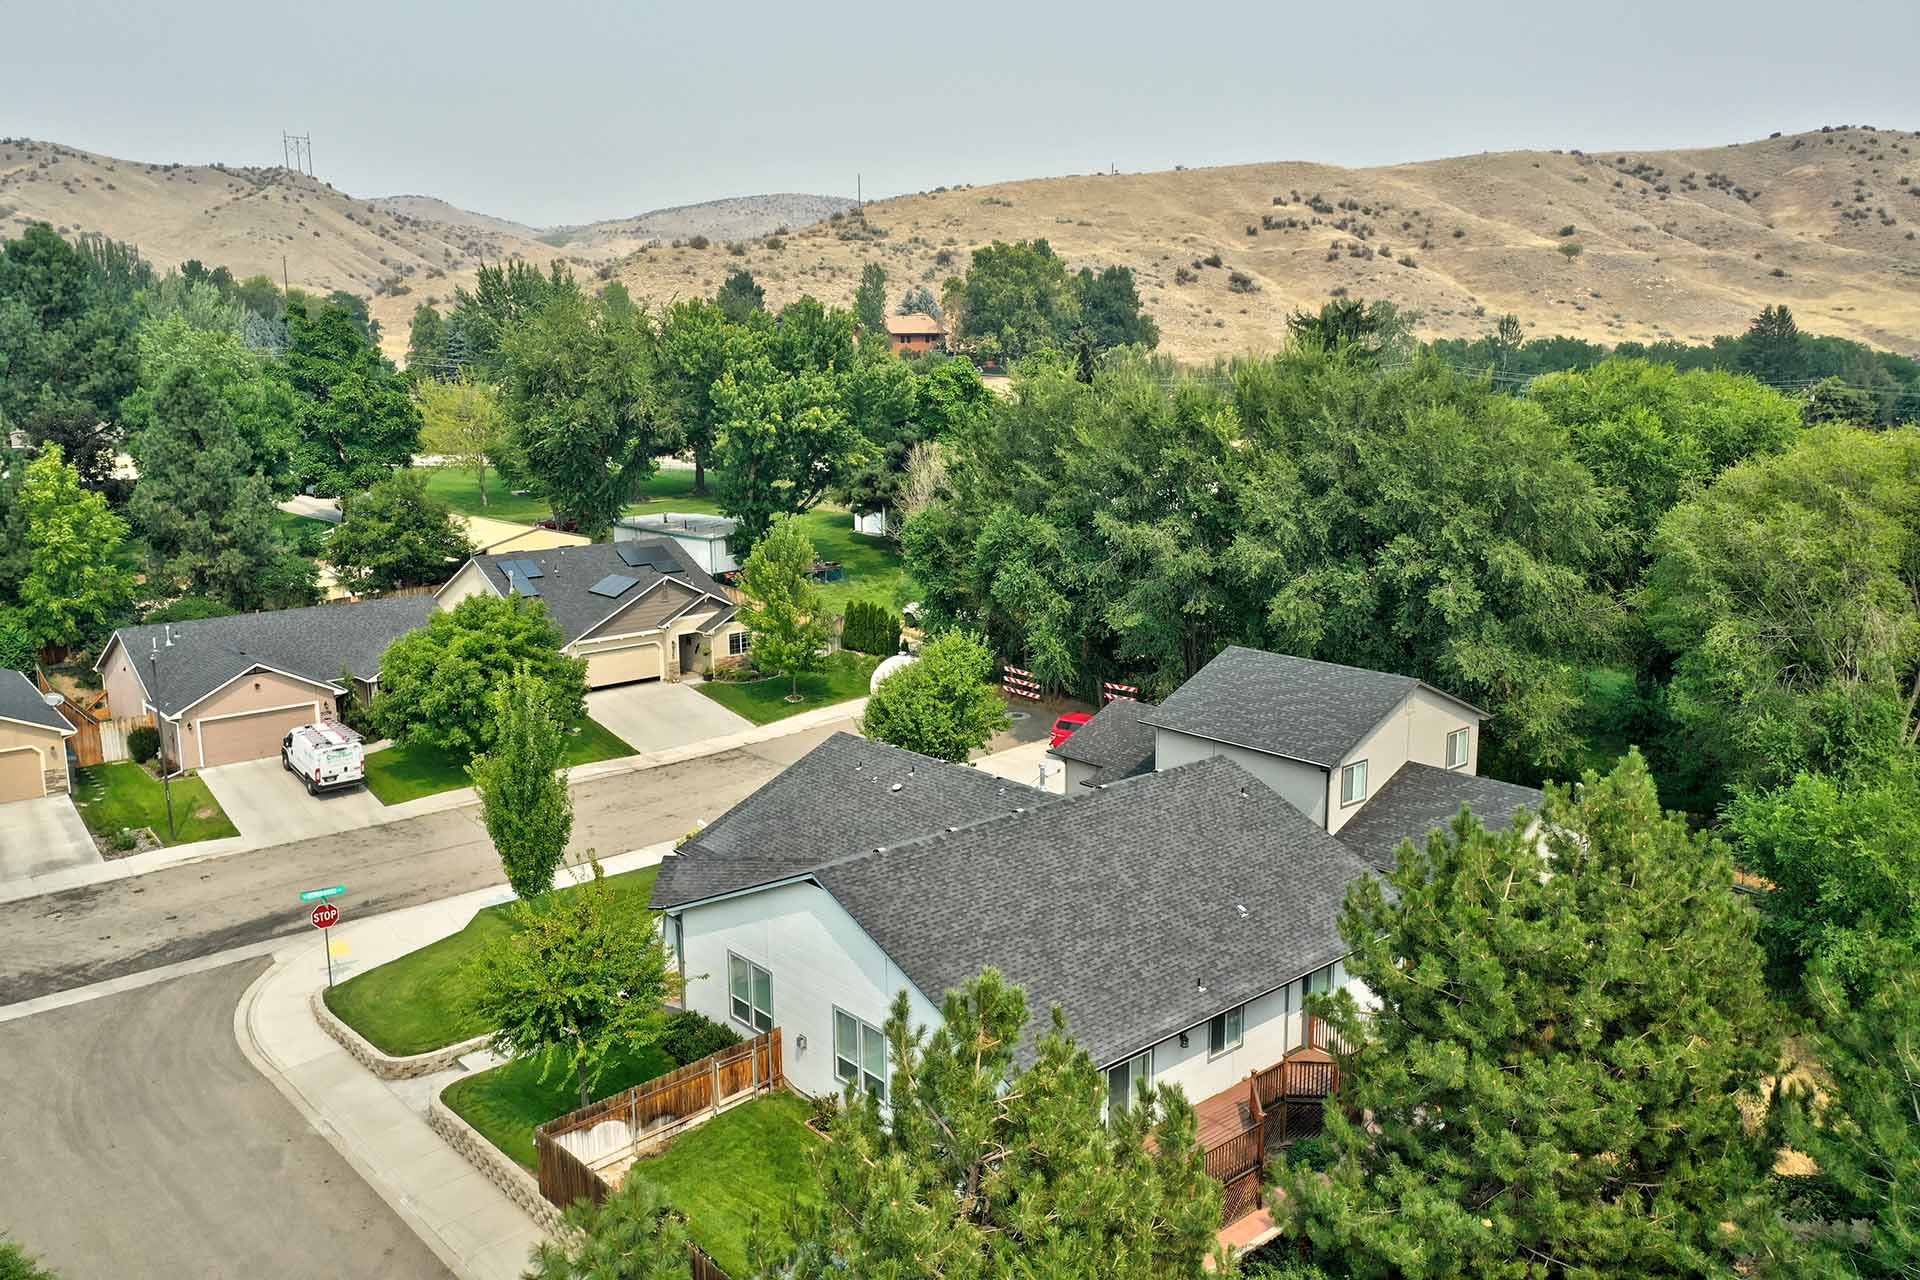 Drone footage of suburban neighborhood in Boise Idaho